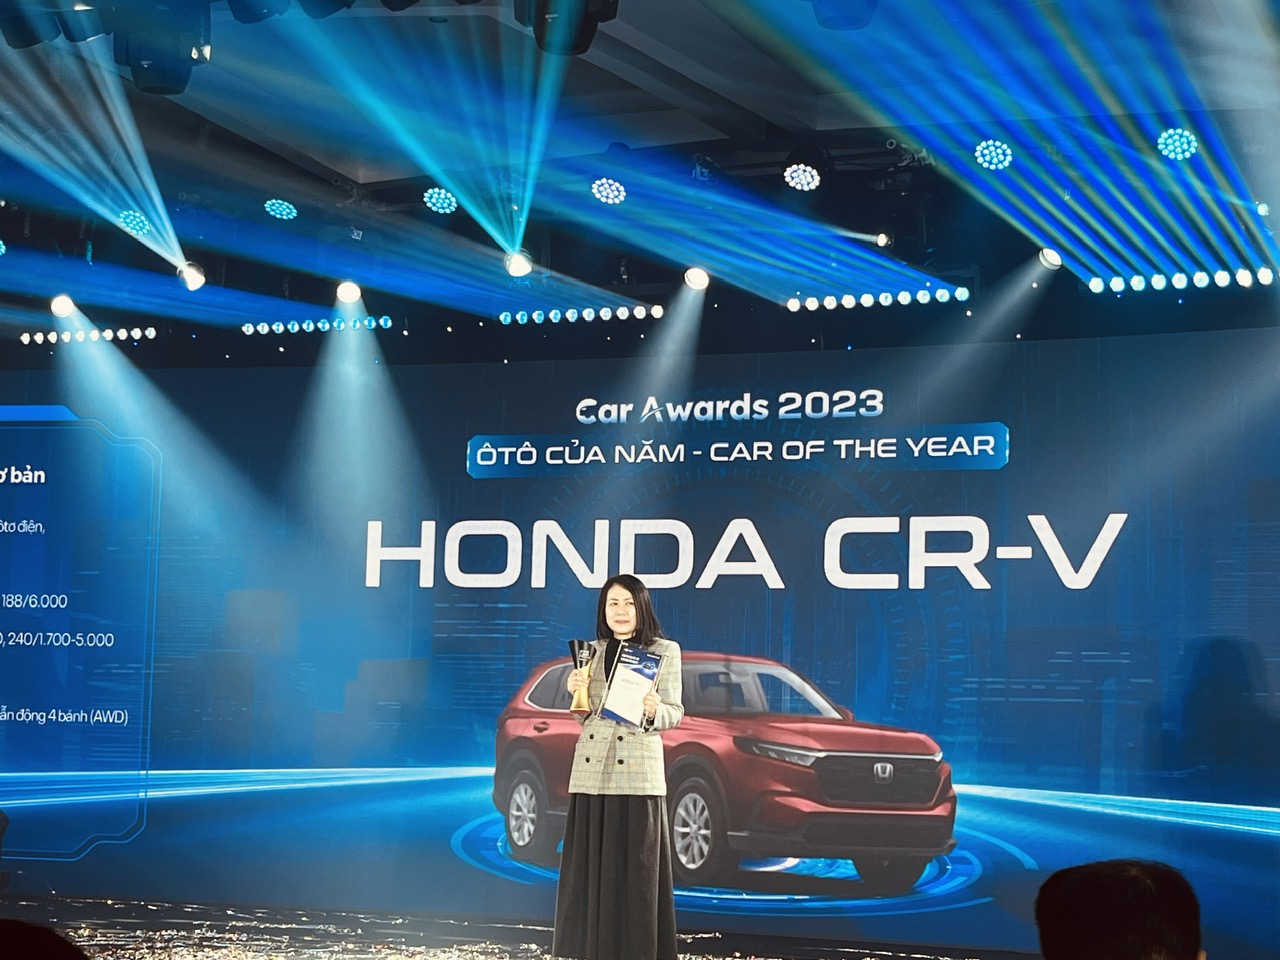 Honda CR-V bản hybrid đoạt giải Car Awards 2023